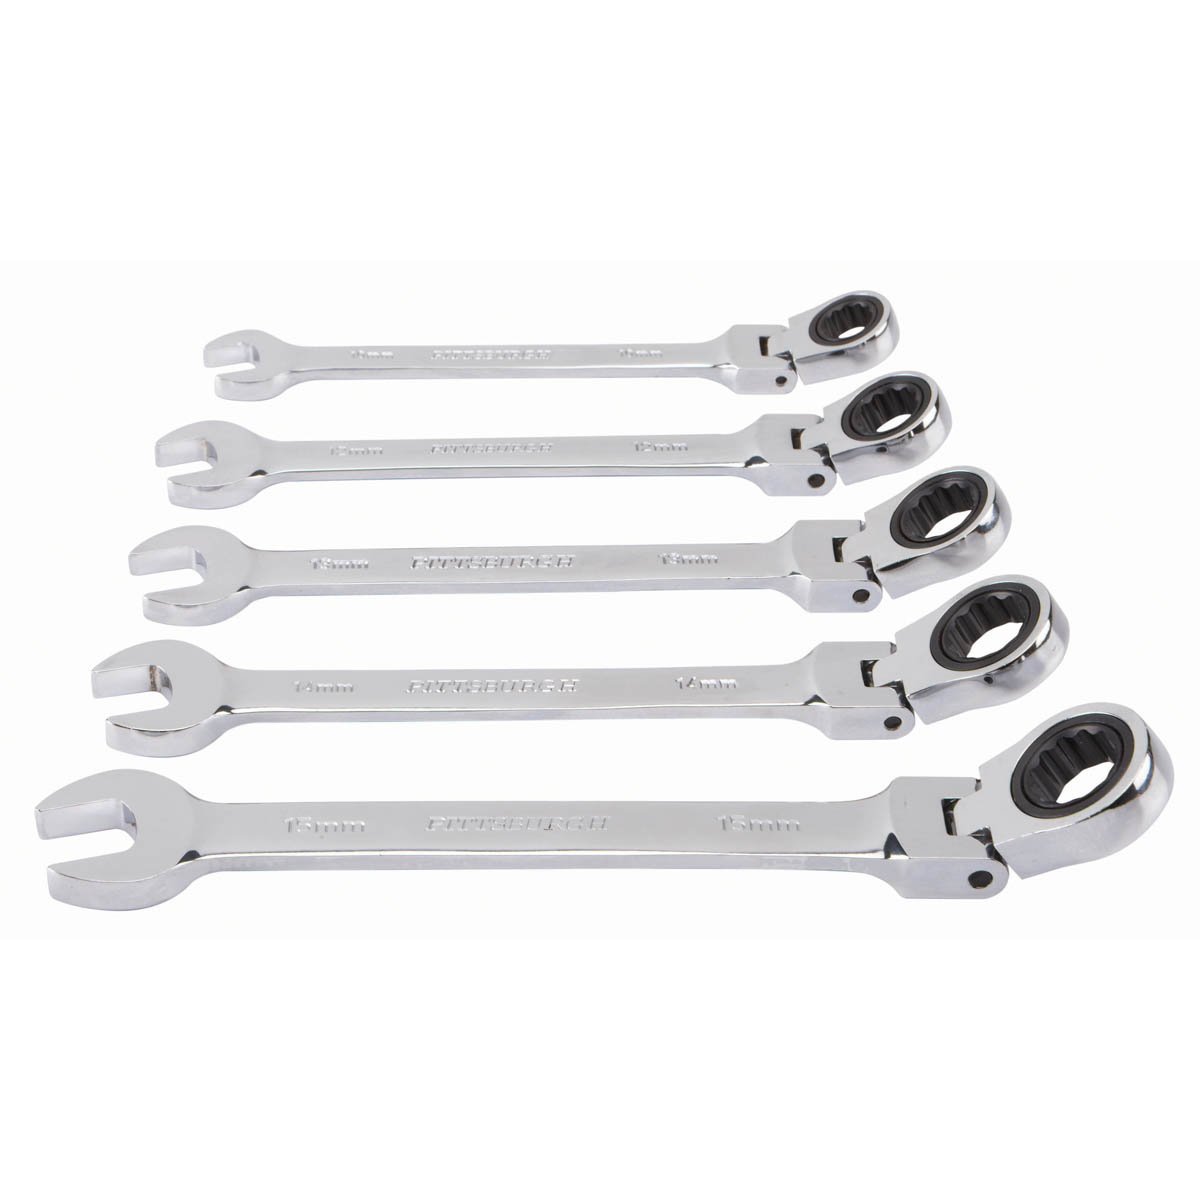 PITTSBURGH Metric Flex-Head Combination Ratcheting Wrench Set 5 Pc. - Item 60592 / 61710 / 66286 / 93791 / 96423